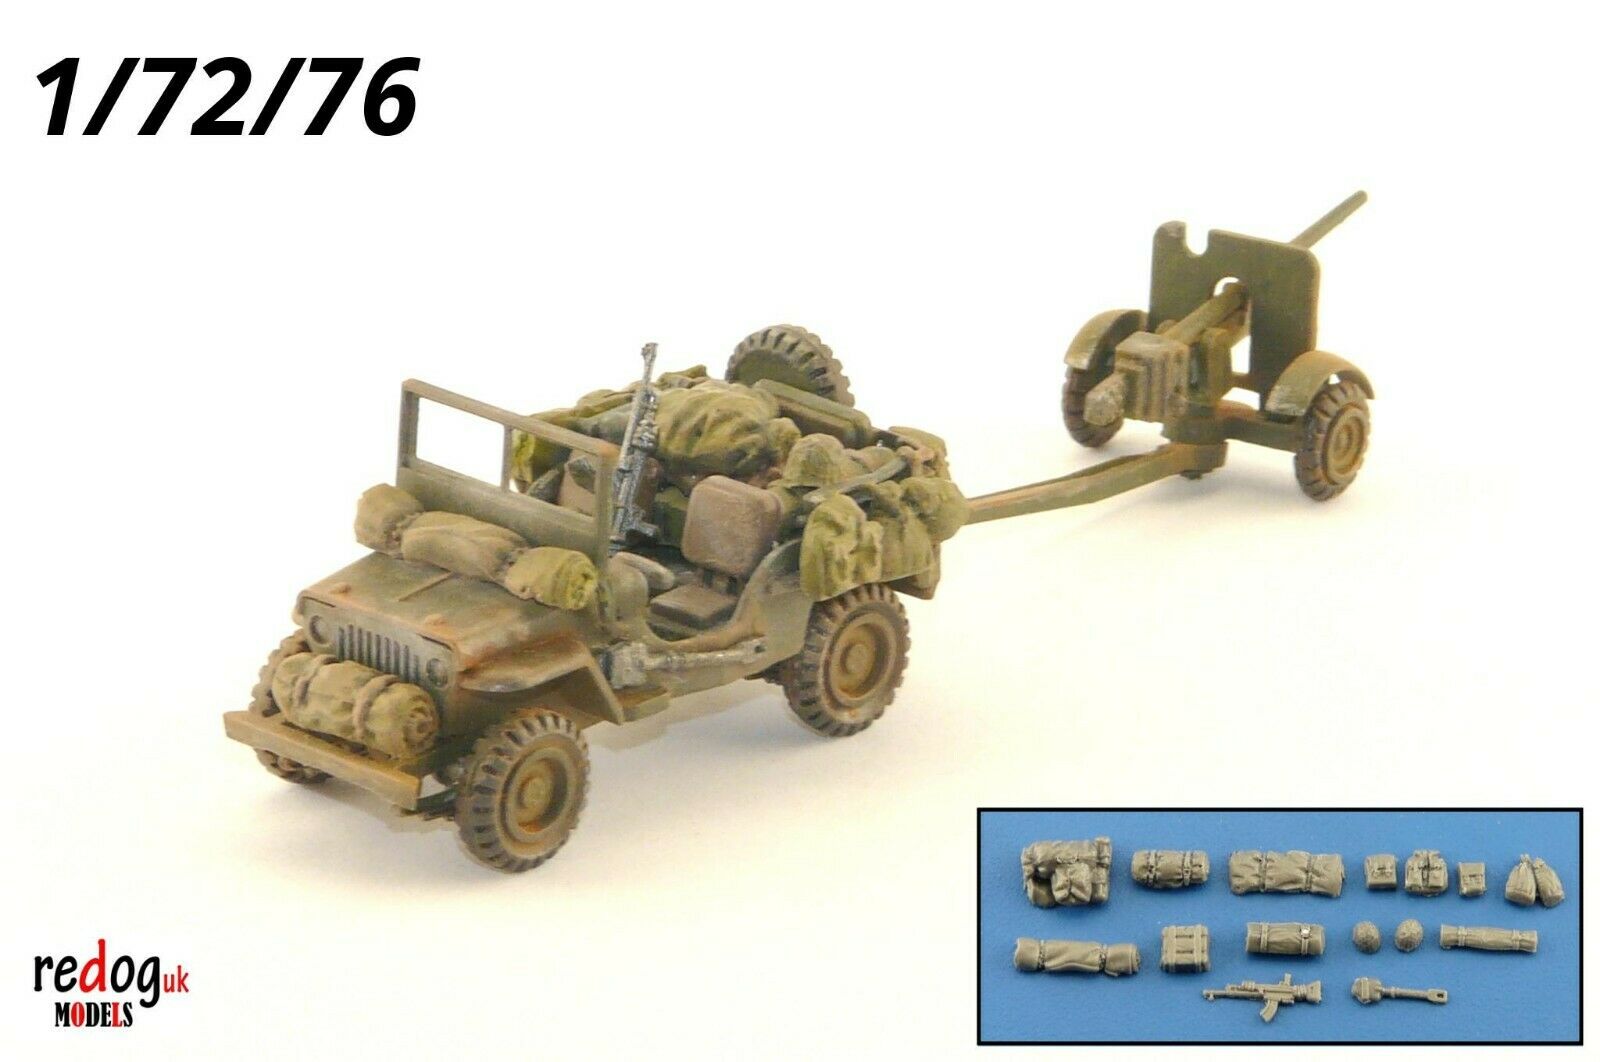 Redog 1/72 Willys Jeep - Military Scale Model Stowage Kit - redoguk